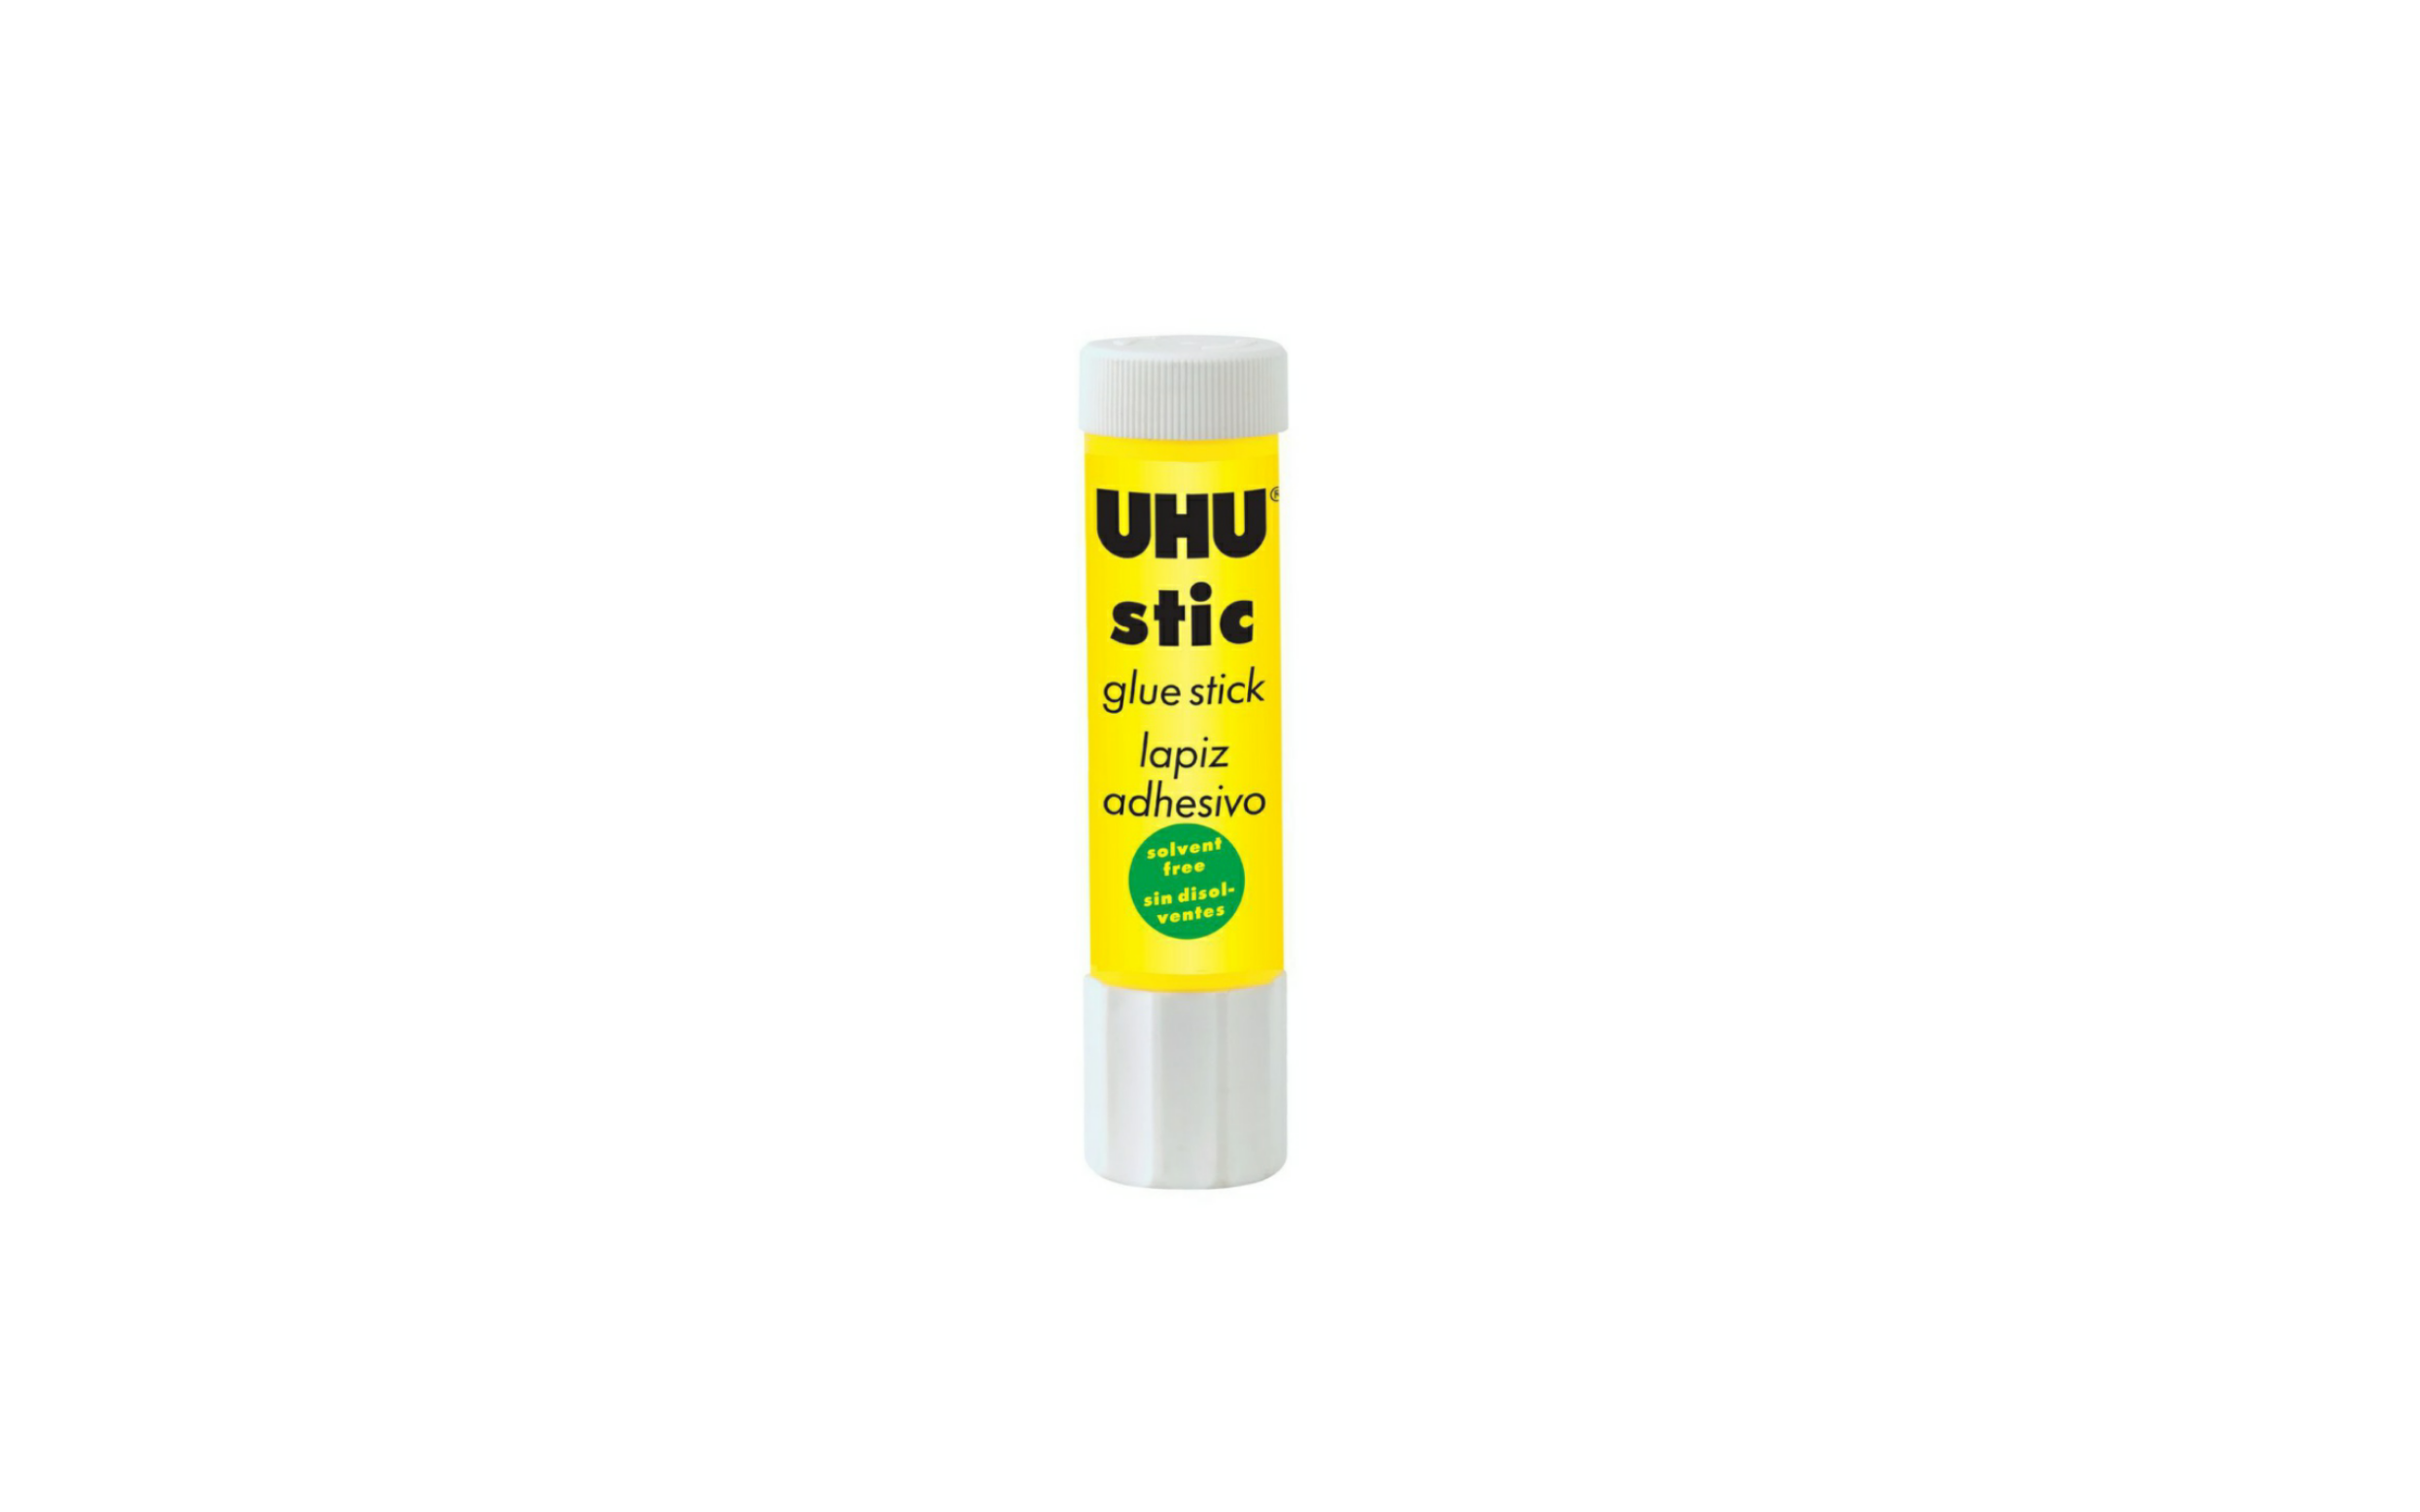 UHU stic solvent free